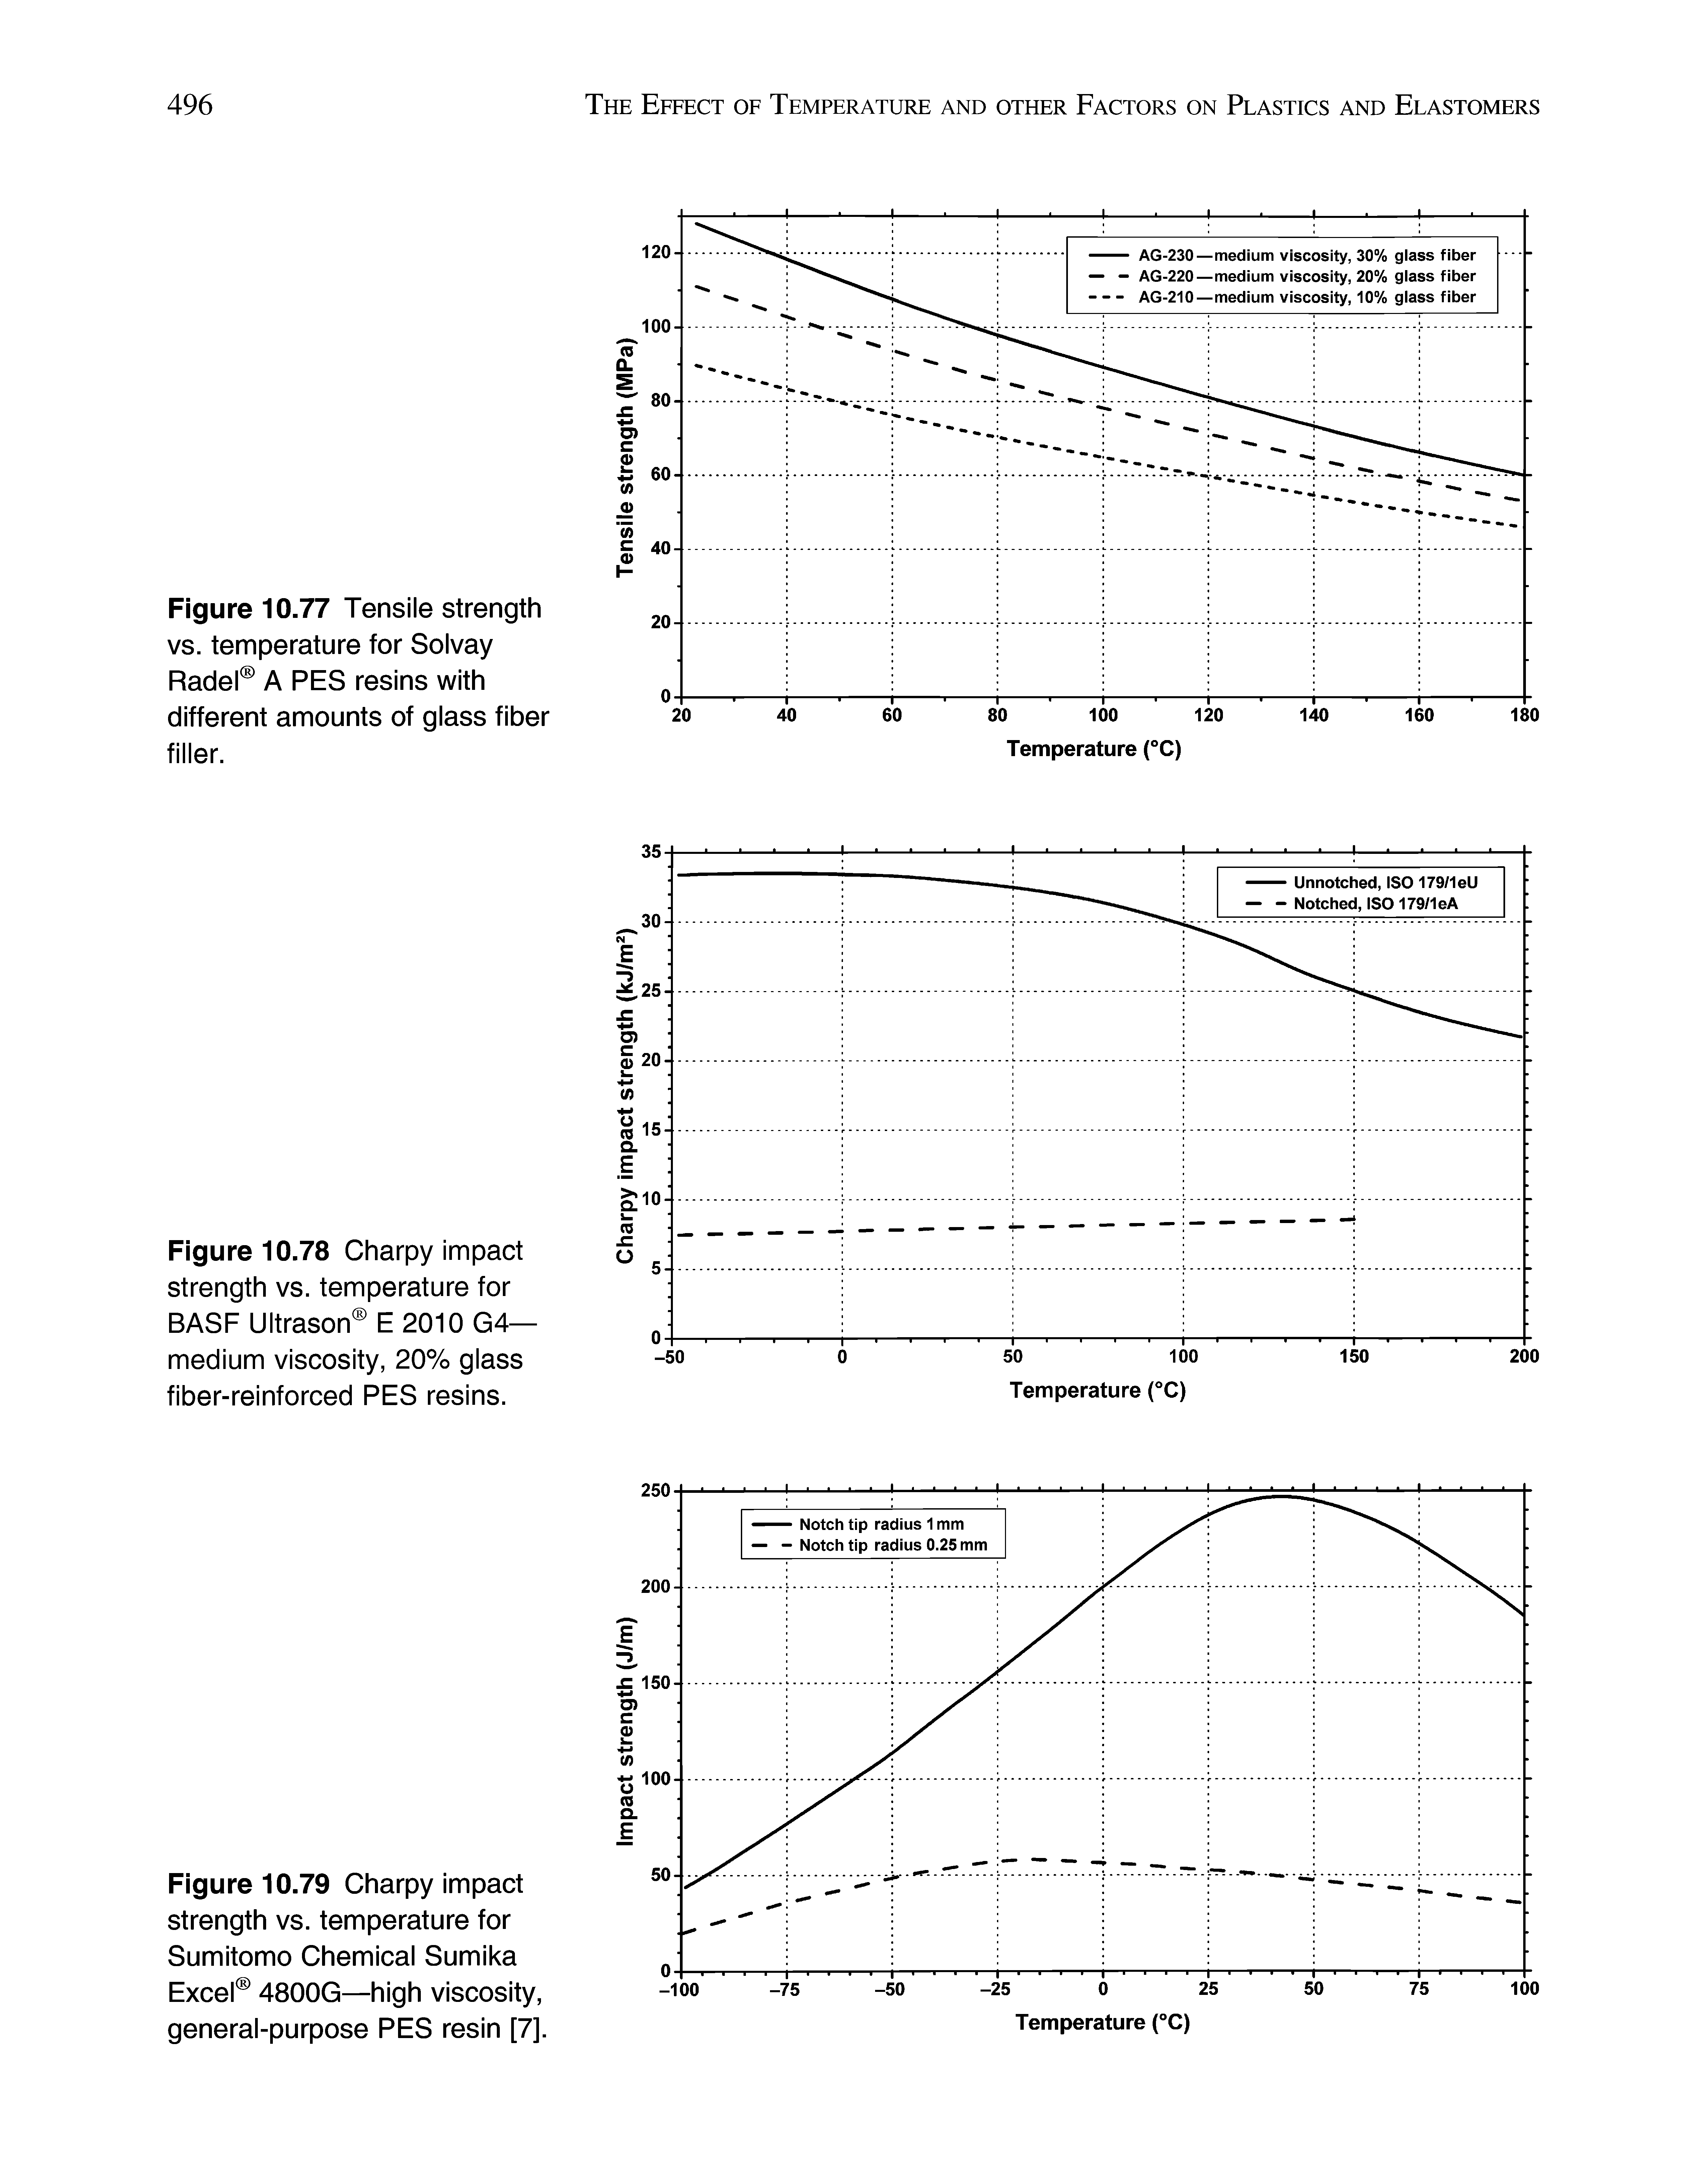 Figure 10.78 Charpy Impact strength vs. temperature for BASF Ultrason E 2010 G4— medium viscosity, 20% glass fIber-reInforced PES resins.